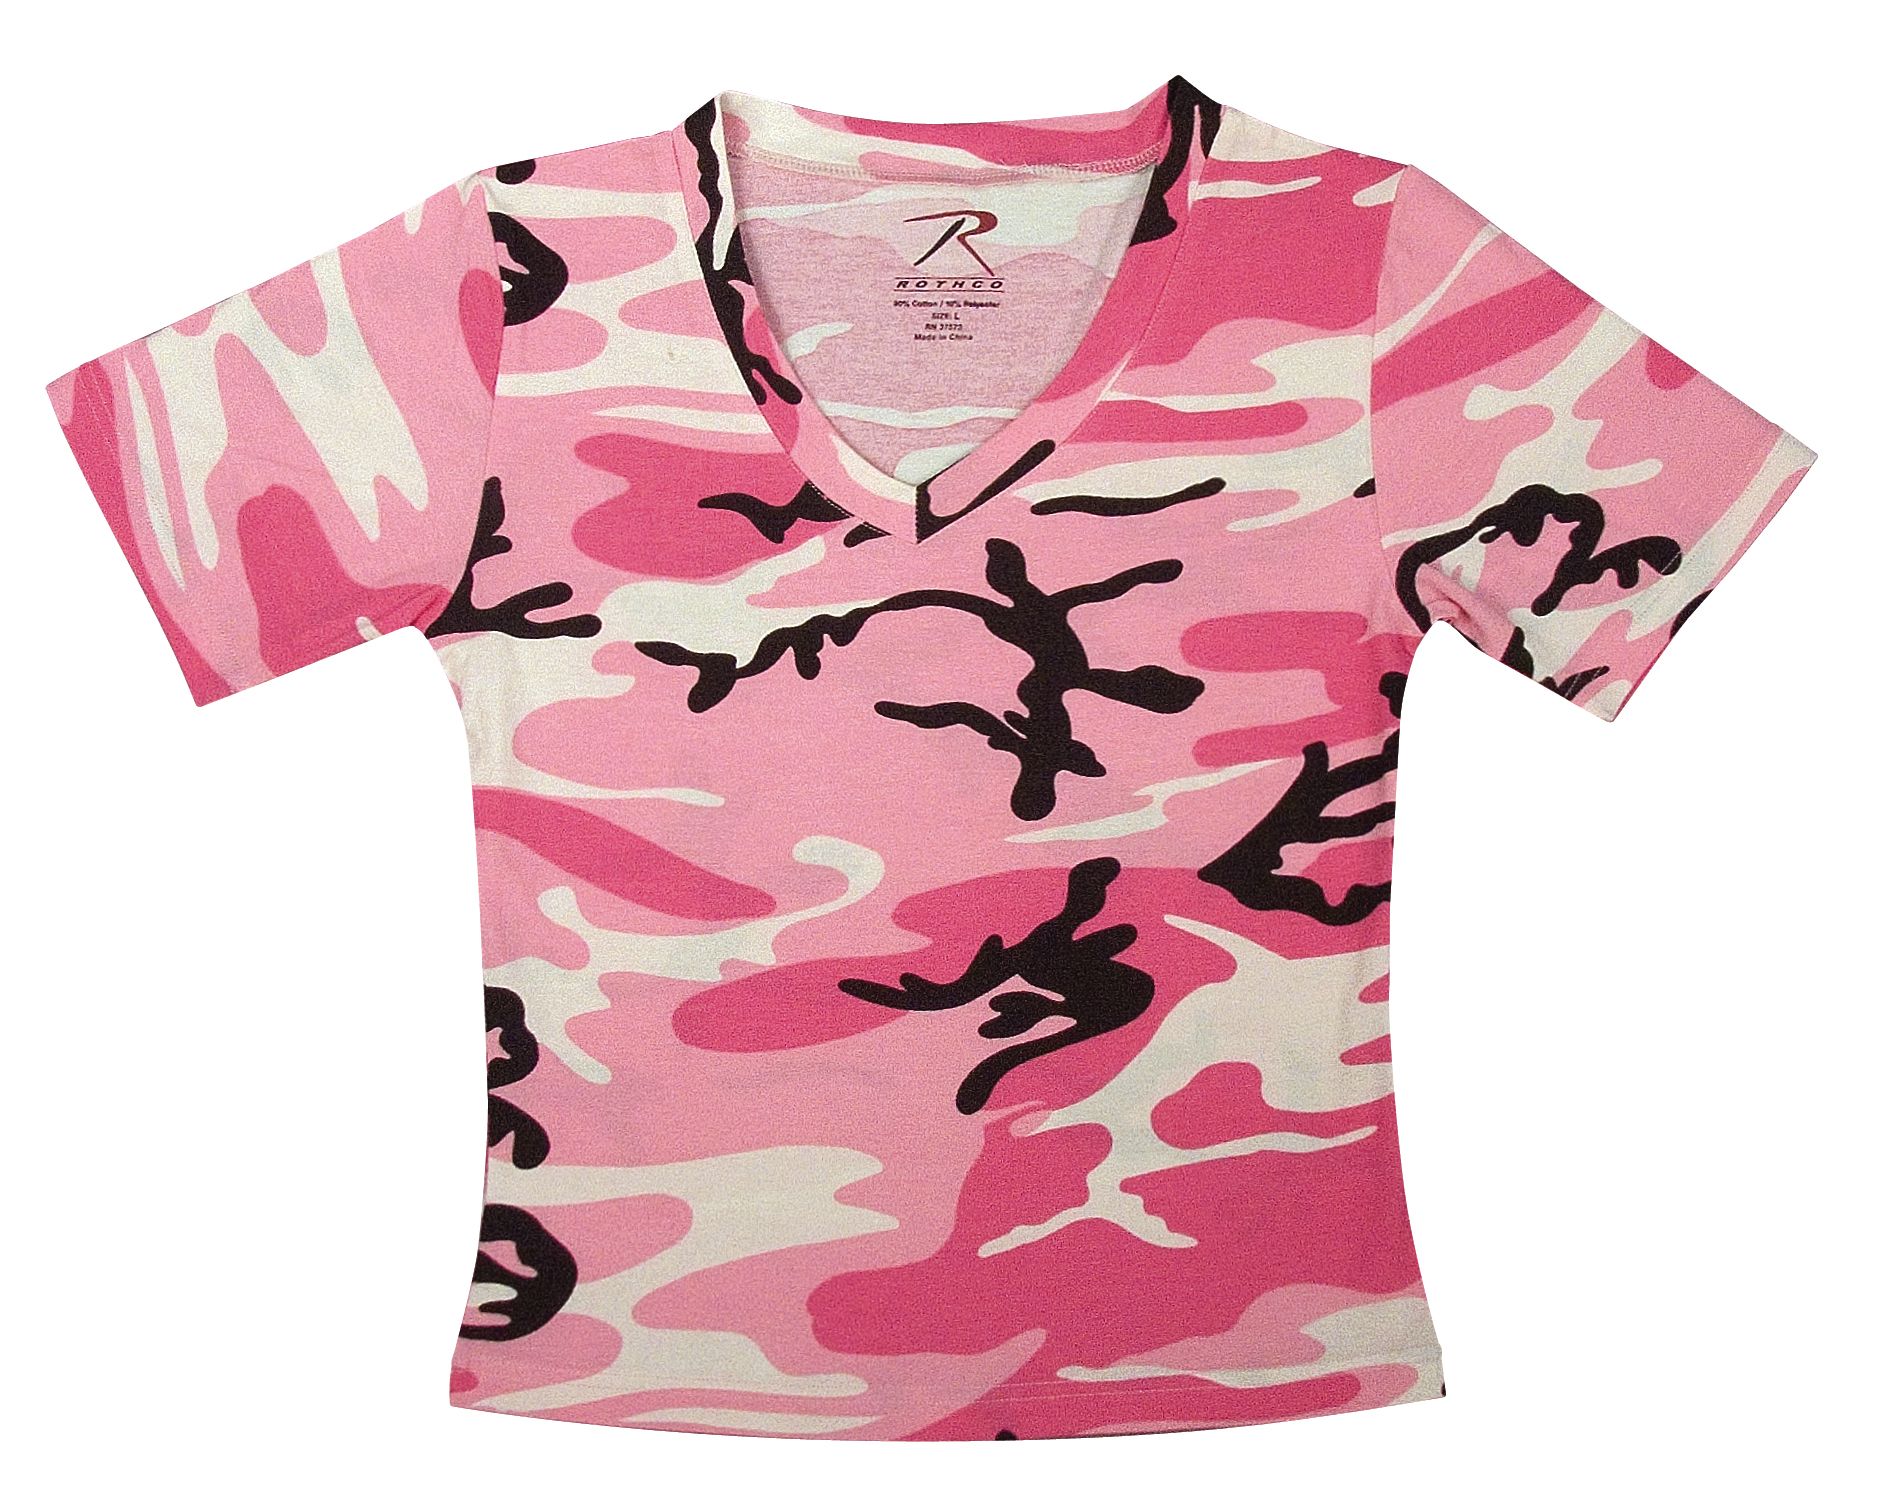 Pink Camo Shirts Cheap Buyudum Cocuk Oldum - camo nike shirt roblox buyudum cocuk oldum